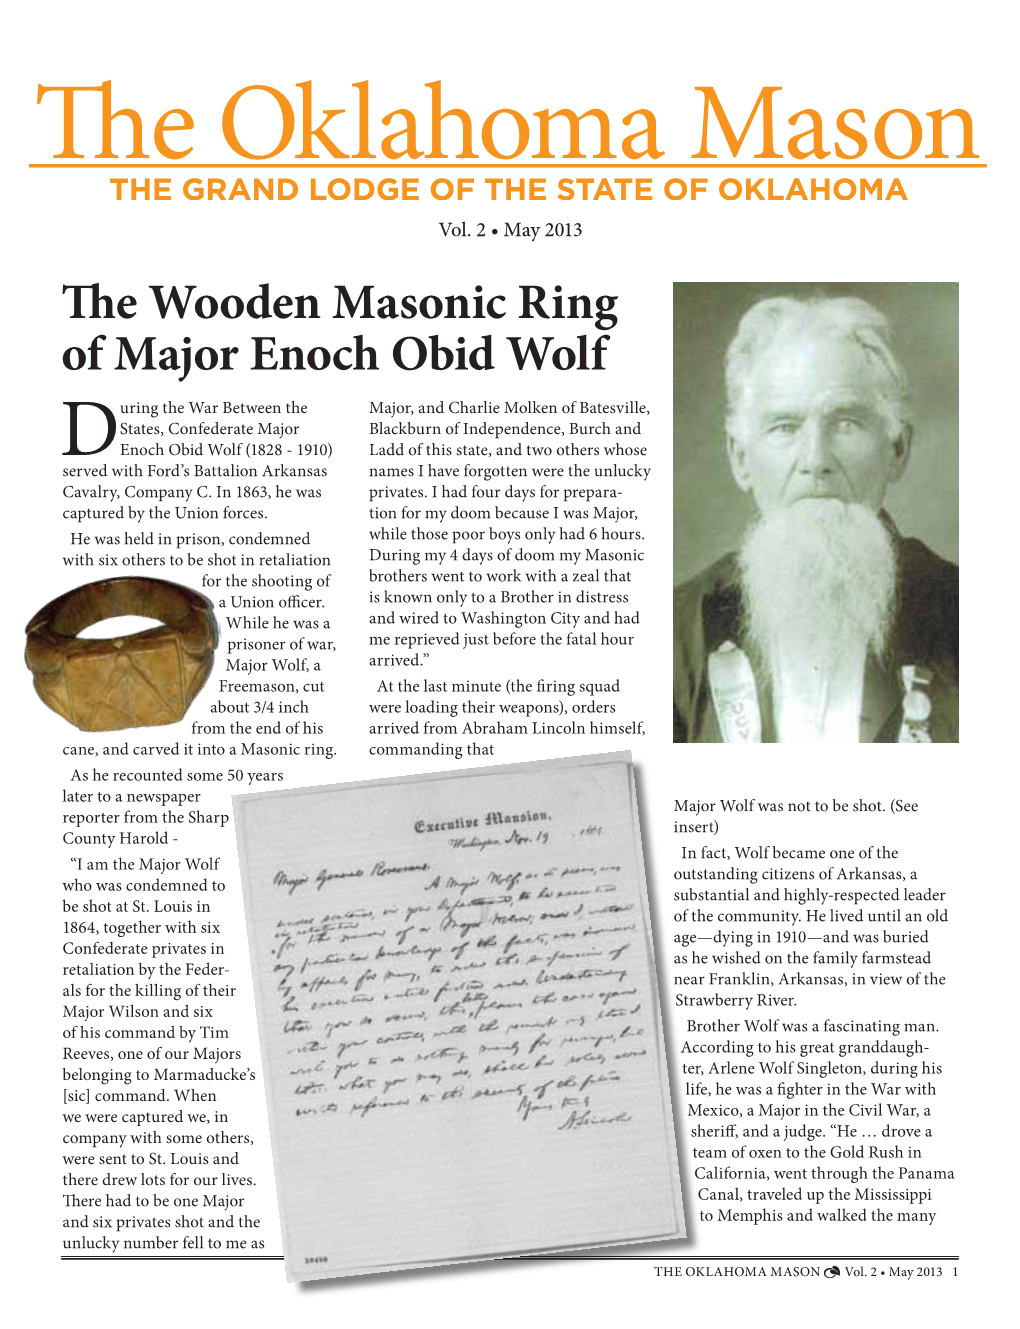 The Wooden Masonic Ring of Major Enoch Obid Wolf